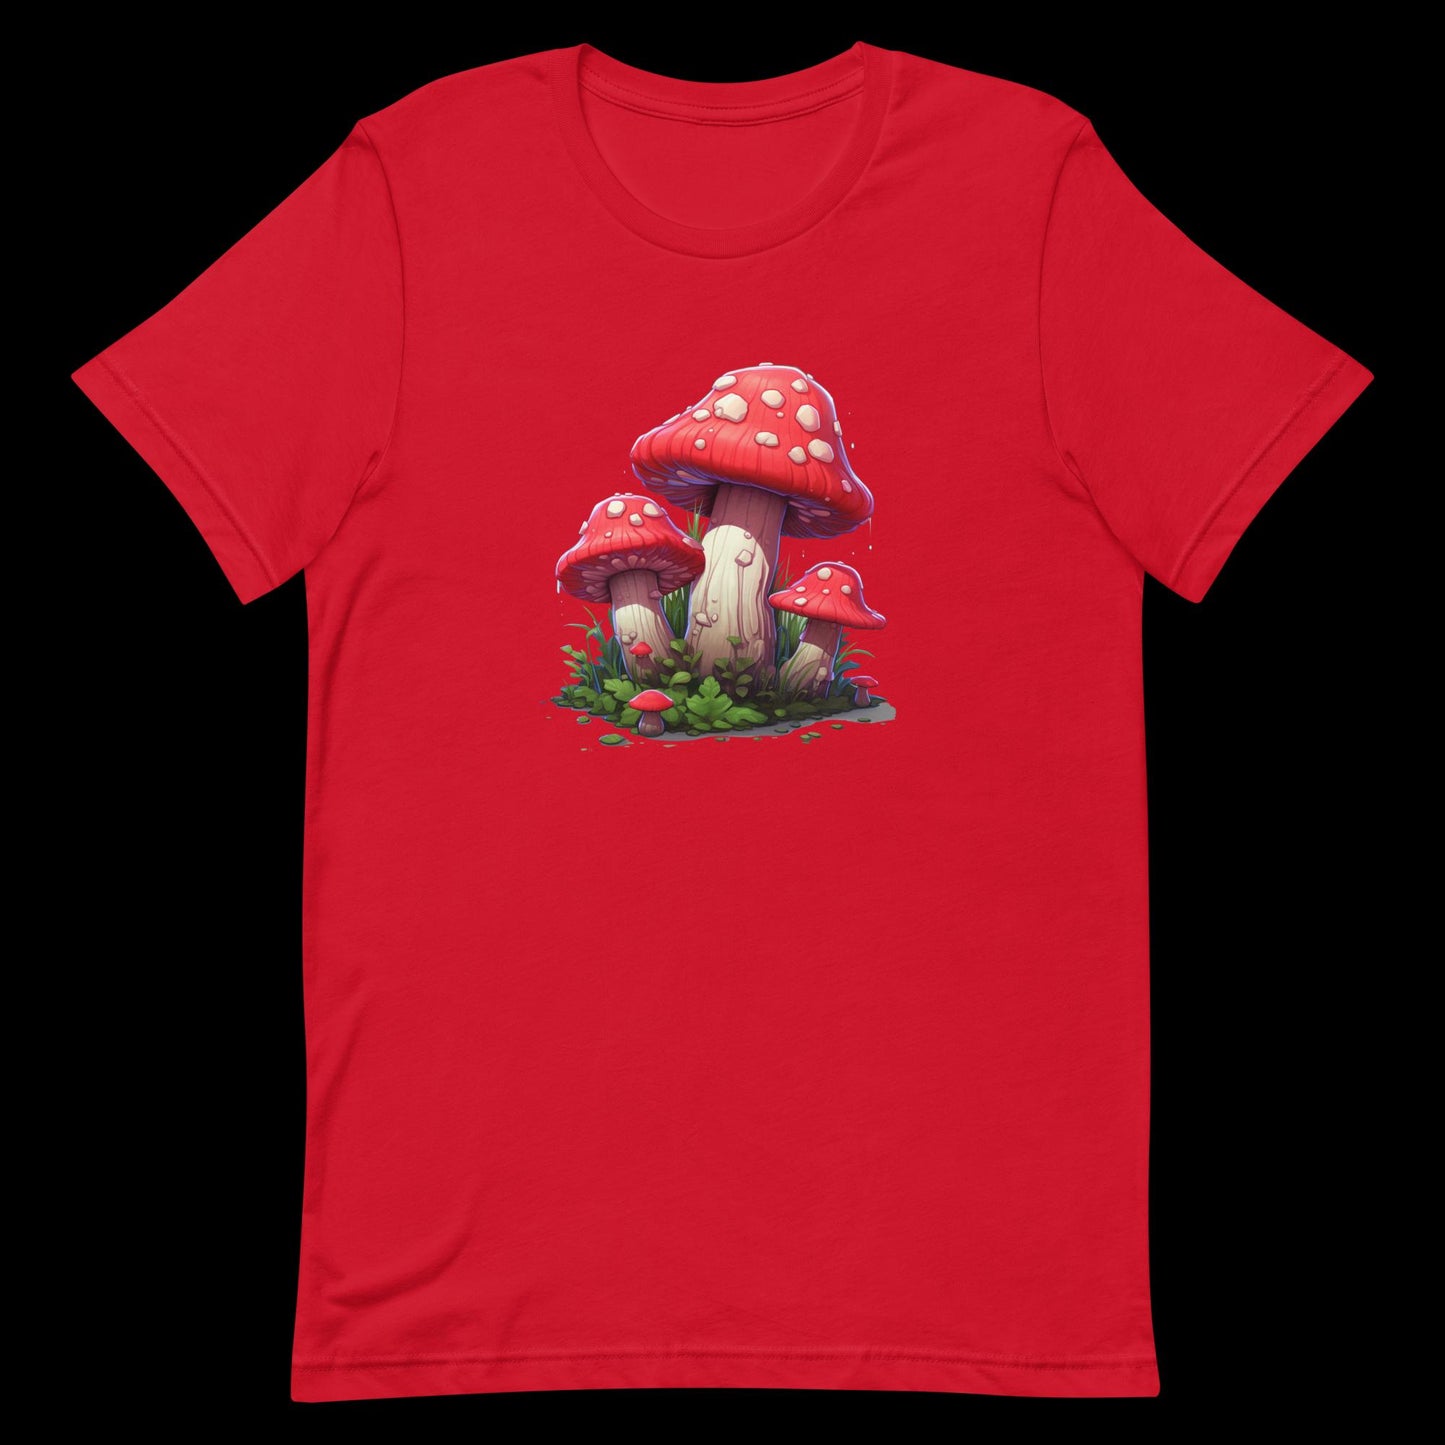 The Pixel Mushrooms Unisex T-Shirt